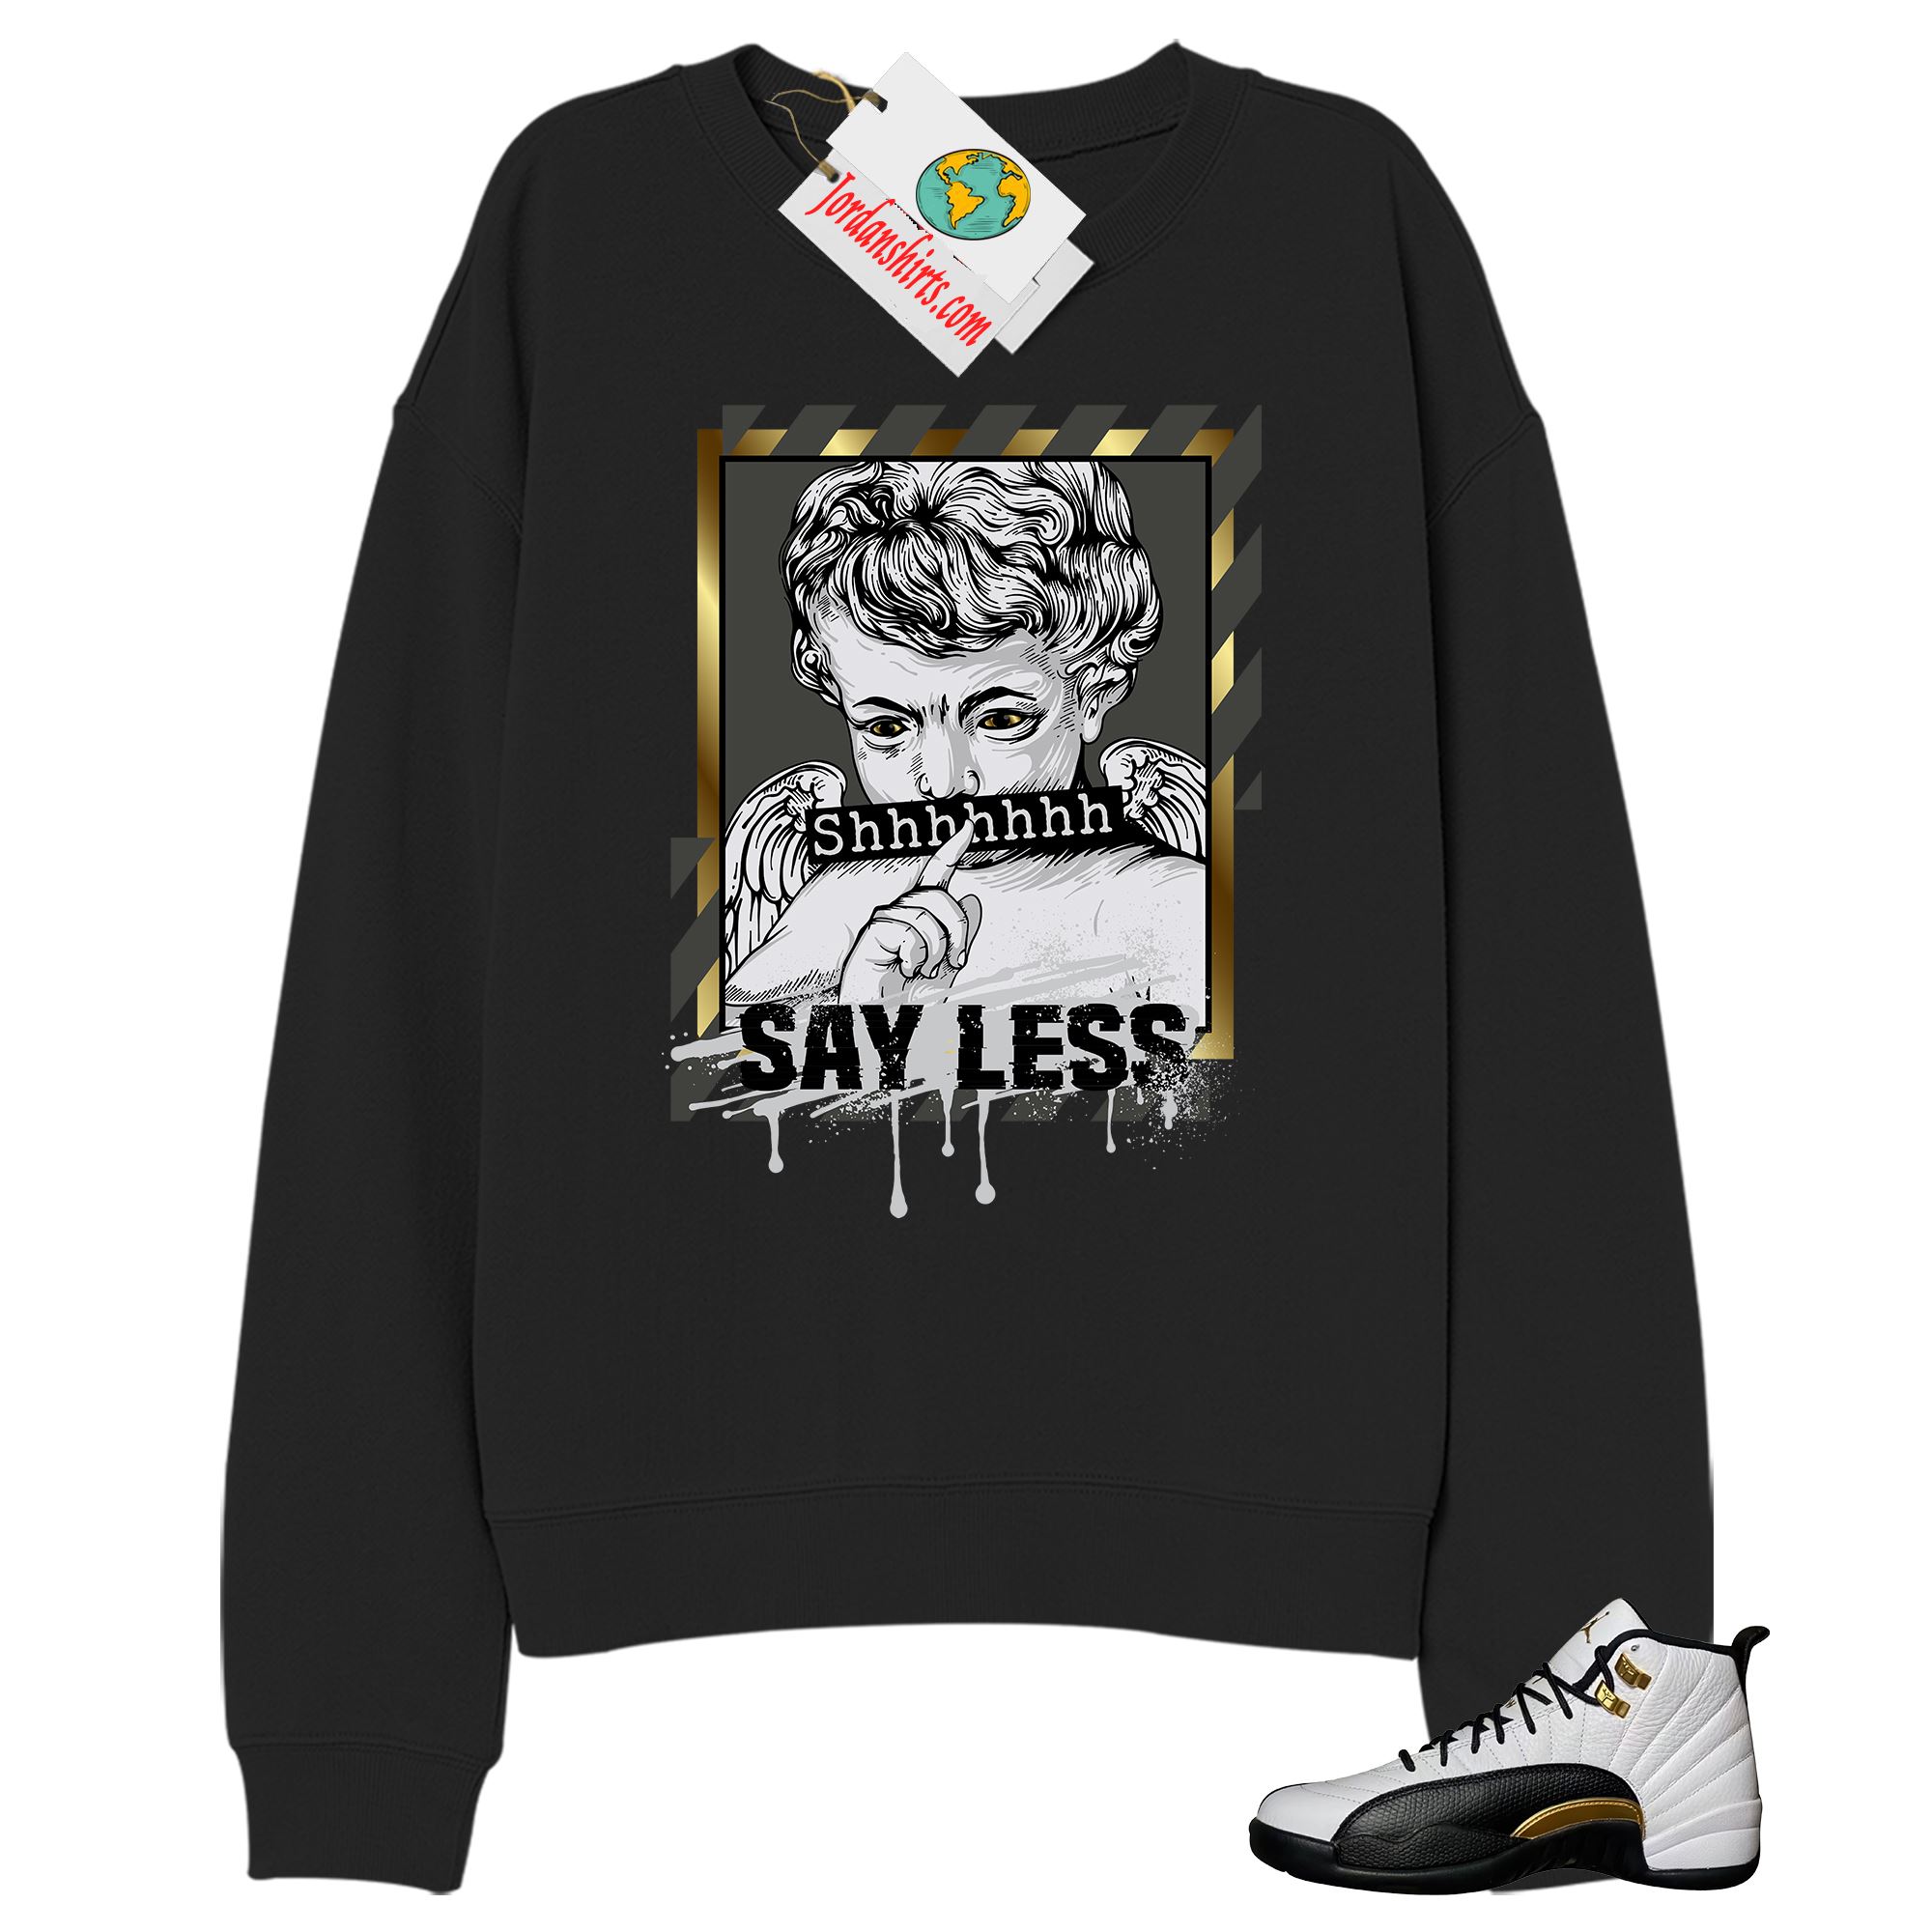 Jordan 12 Sweatshirt, Say Less Angel Black Sweatshirt Air Jordan 12 Royalty 12s Size Up To 5xl